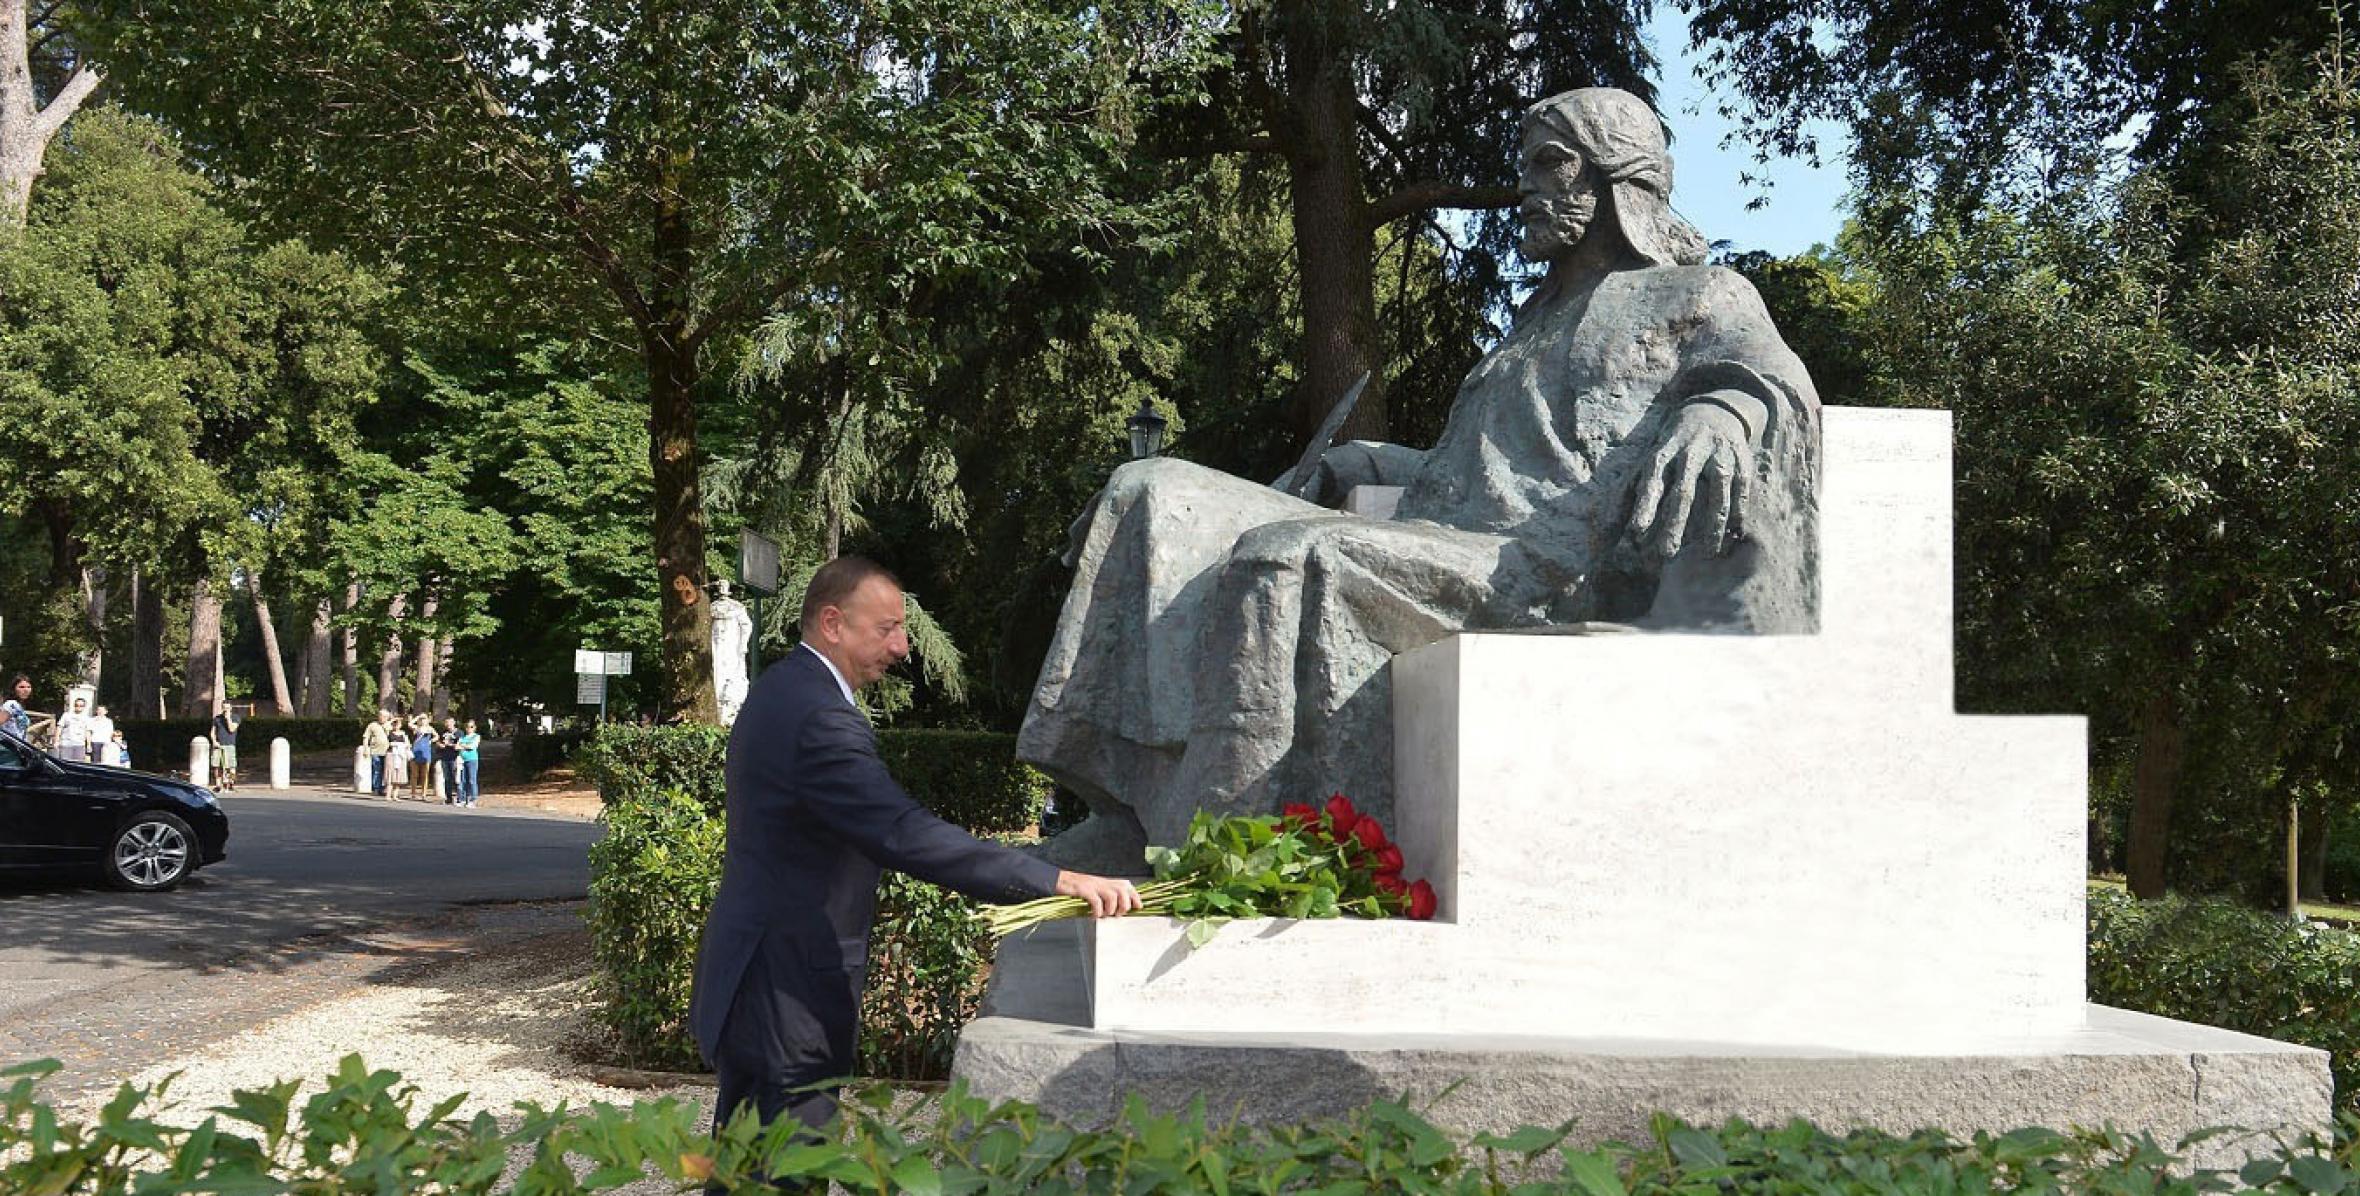 Ilham Aliyev visited a monument to great Azerbaijani poet and thinker Nizami Ganjavi in Rome